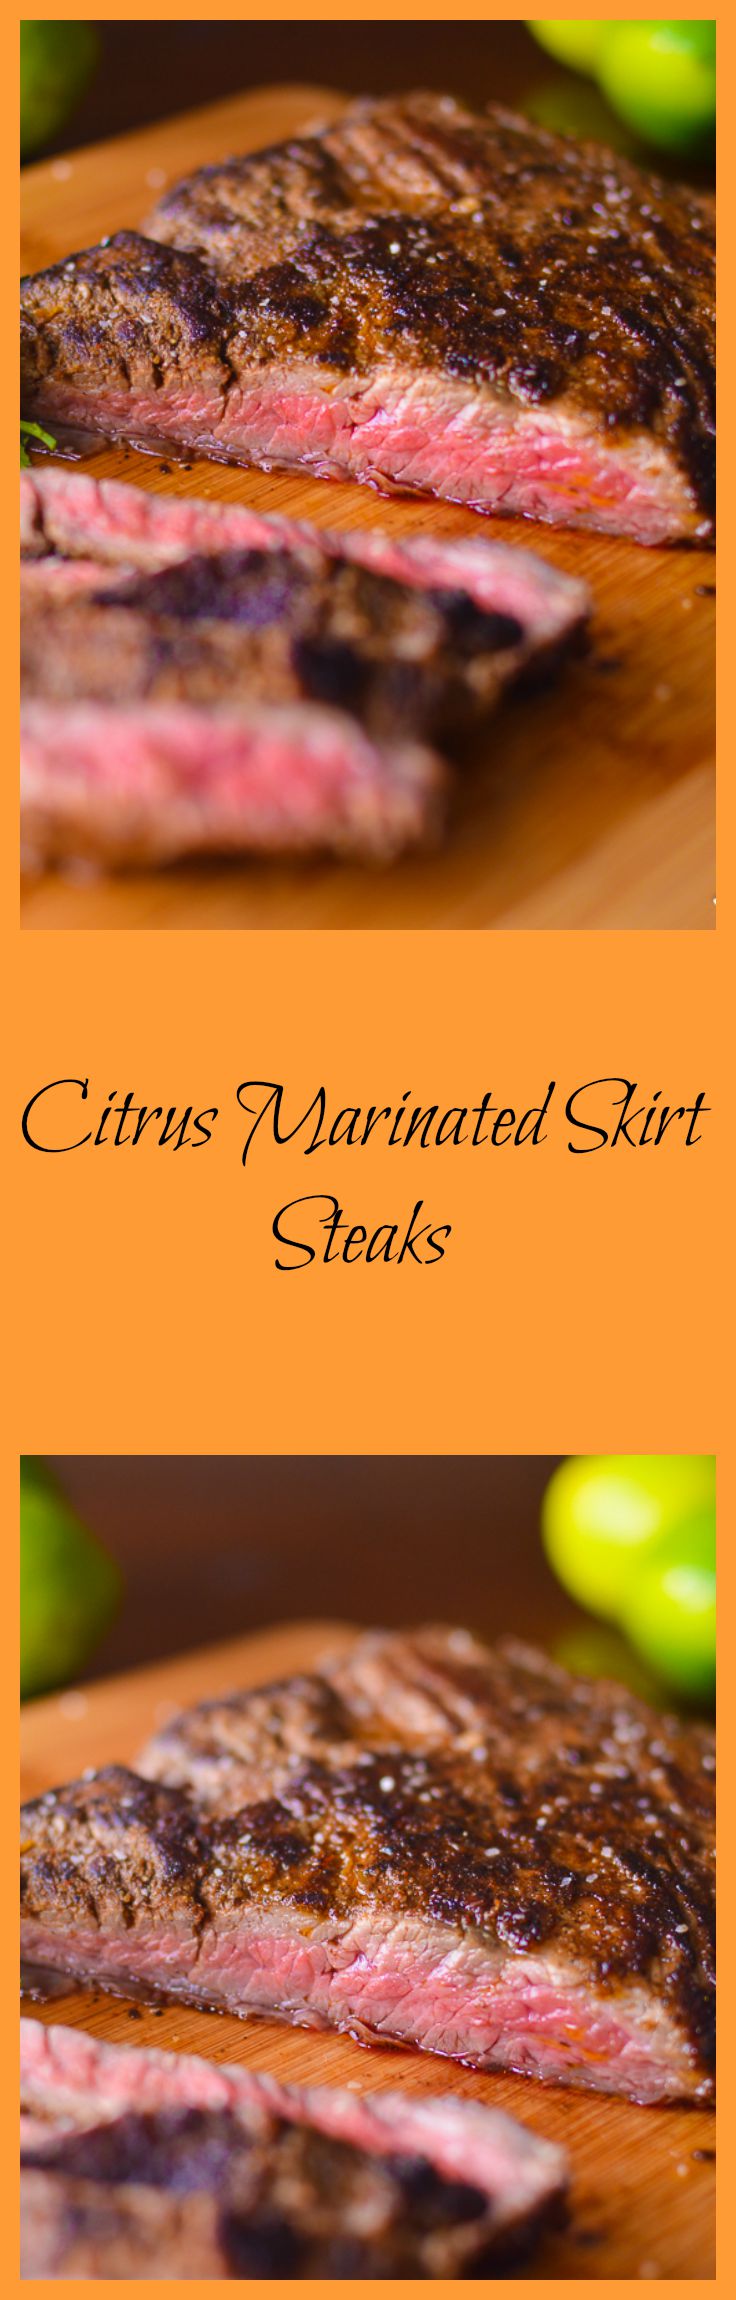 Citrus Marinated Skirt Steaks